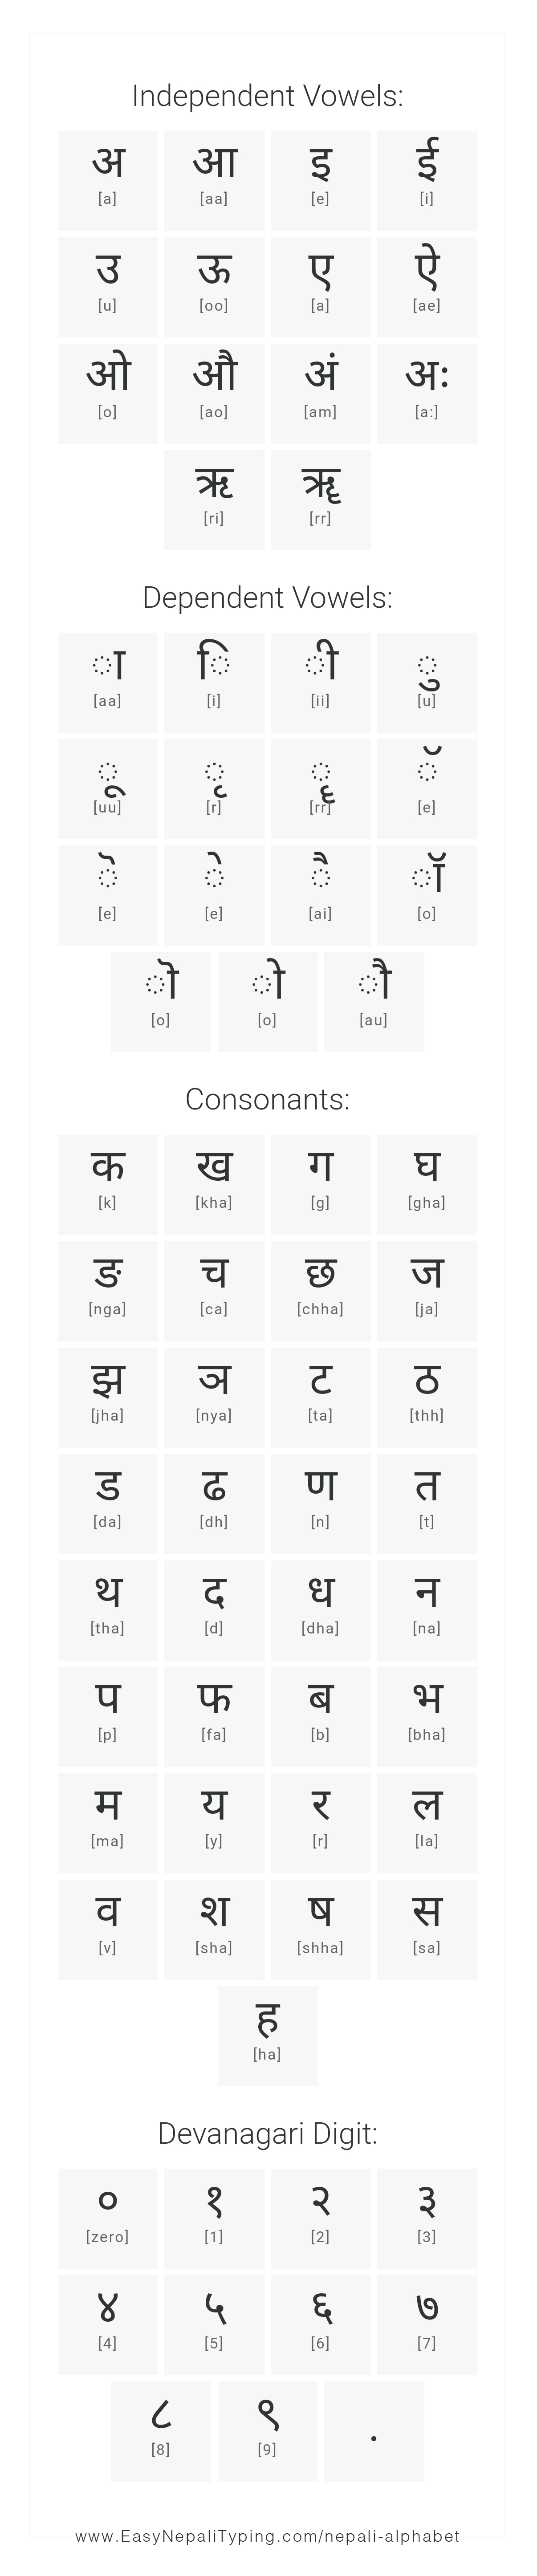 nepali language alphabet